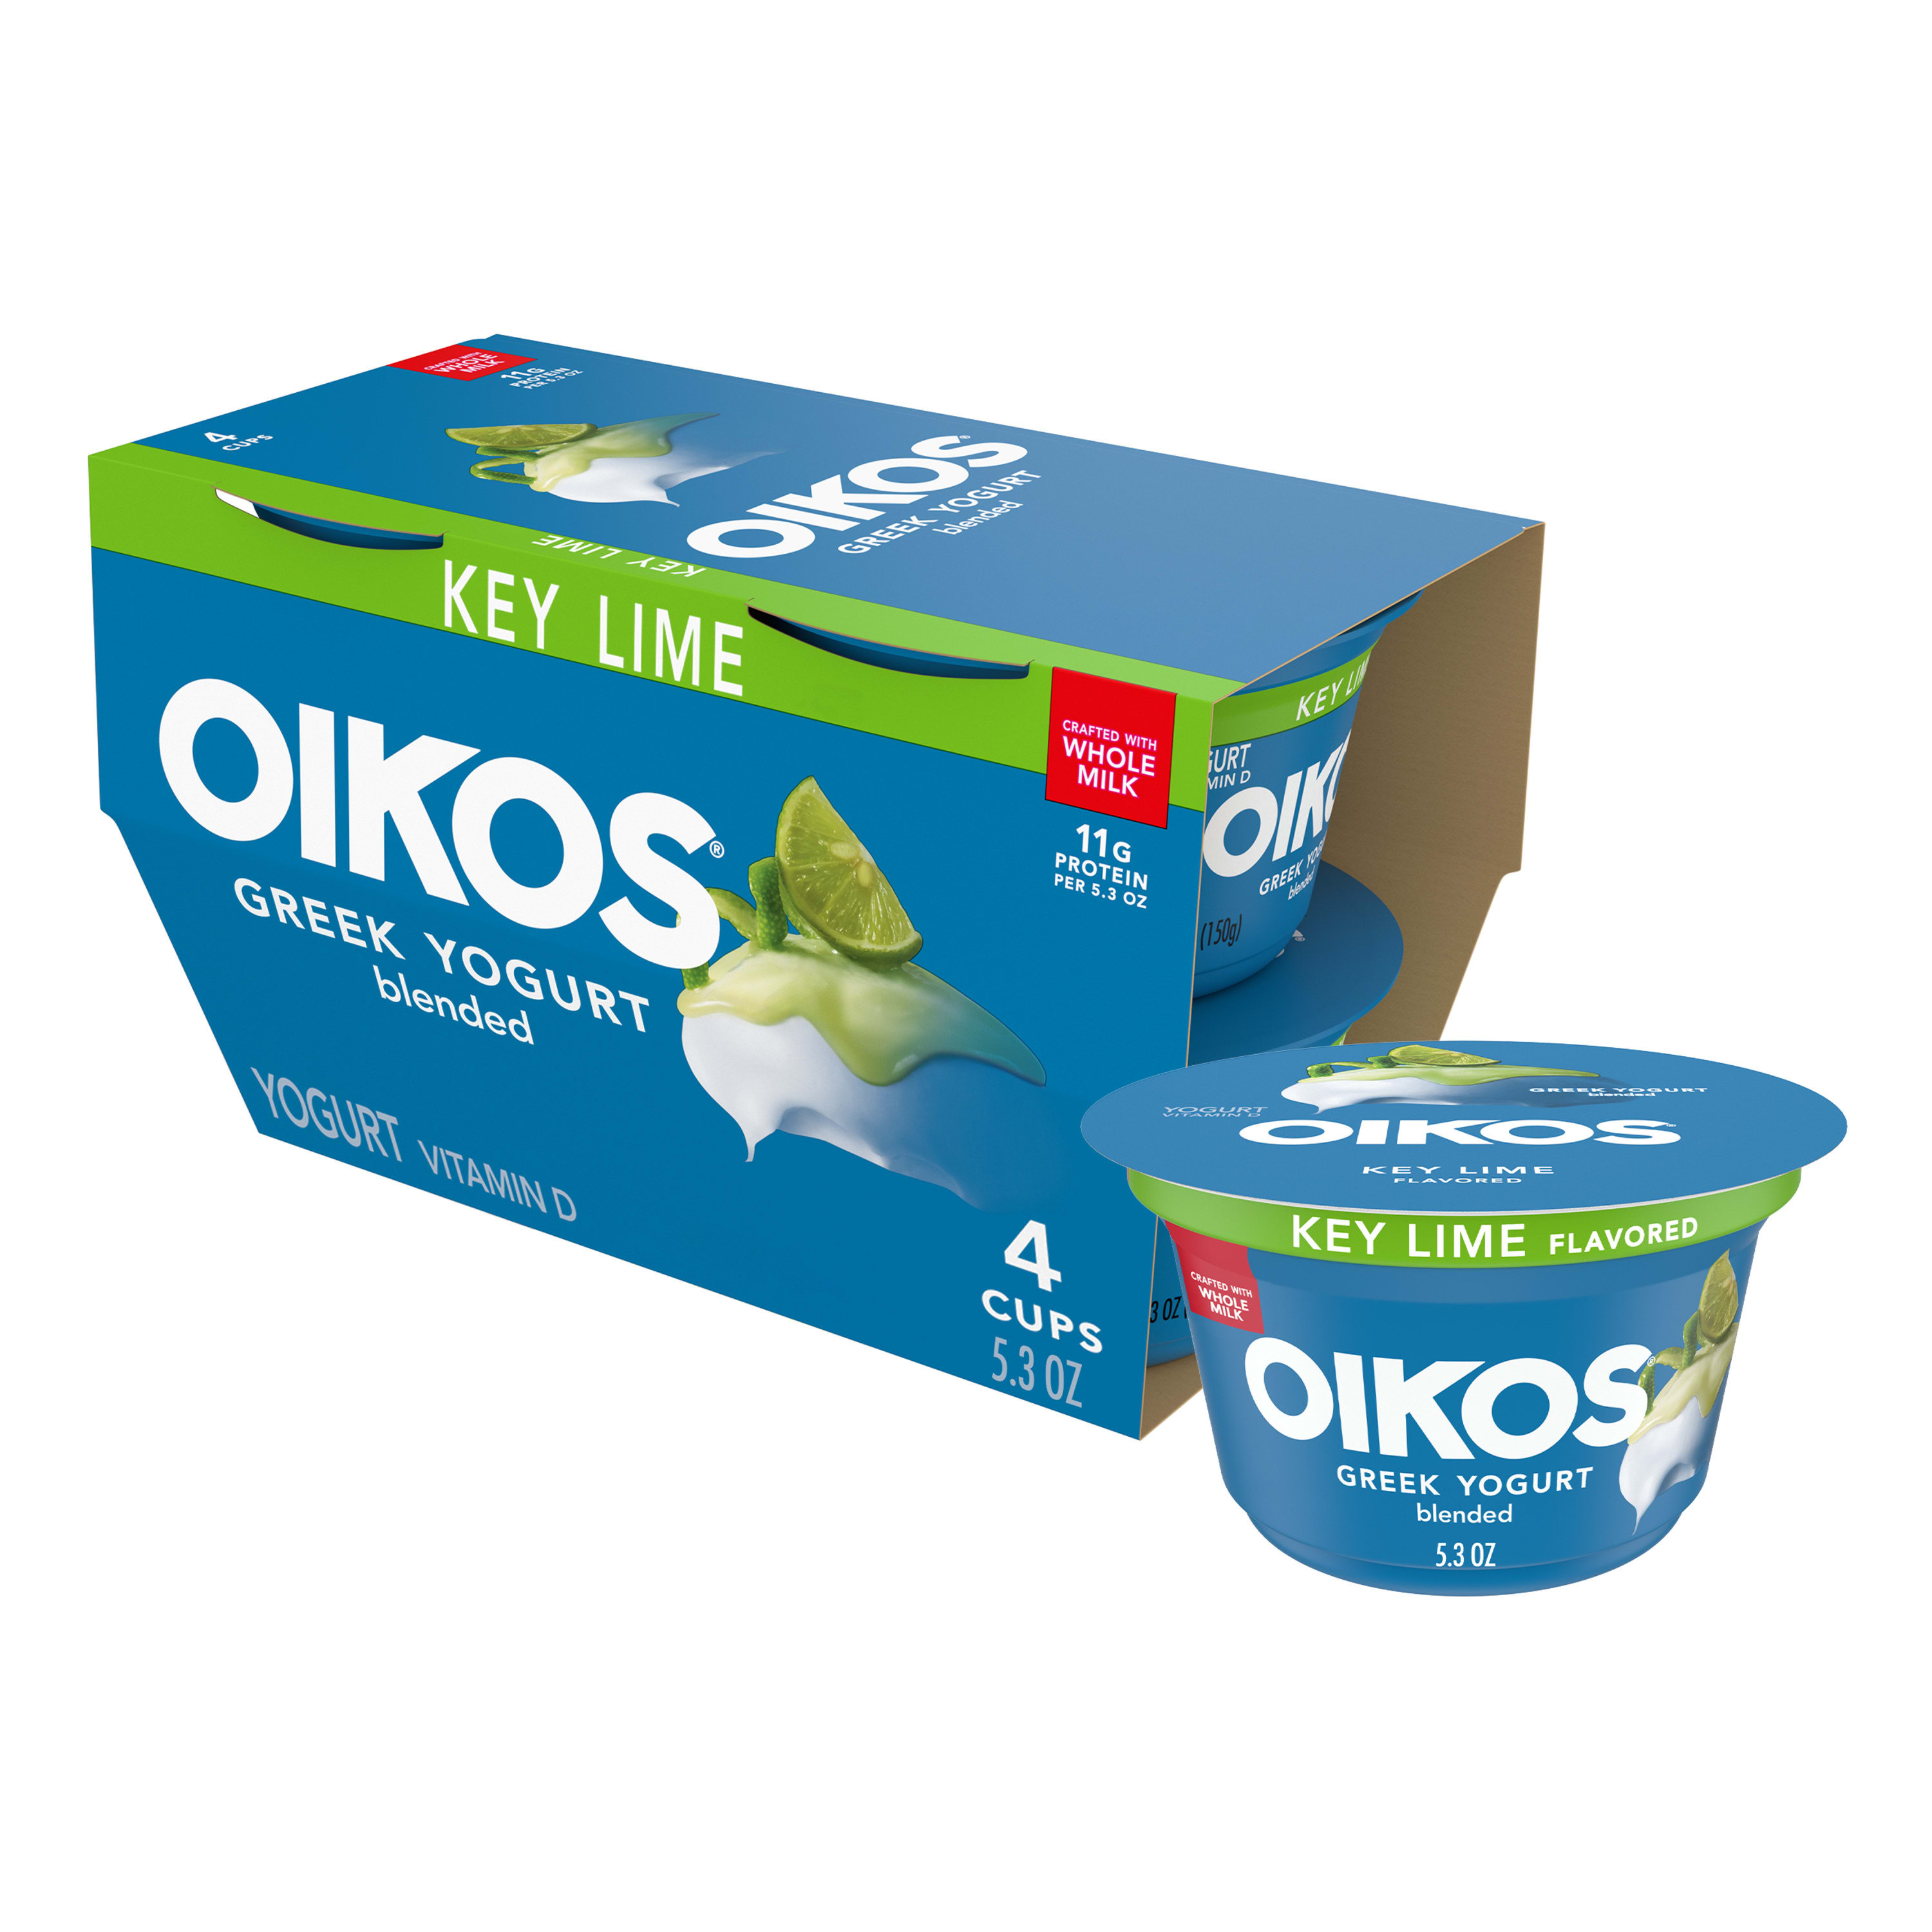 Oikos Whole Milk Key Lime Greek Yogurt, 5.3 Oz. Cups, 4 Count - image 3 of 5